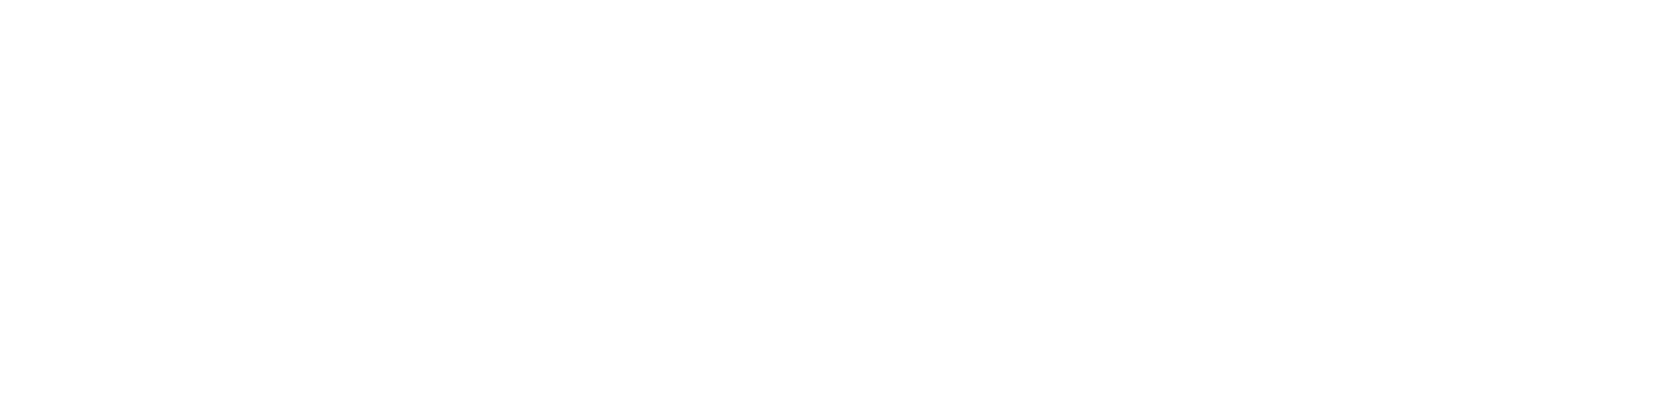 Yle Radio Suomi, Helsinki